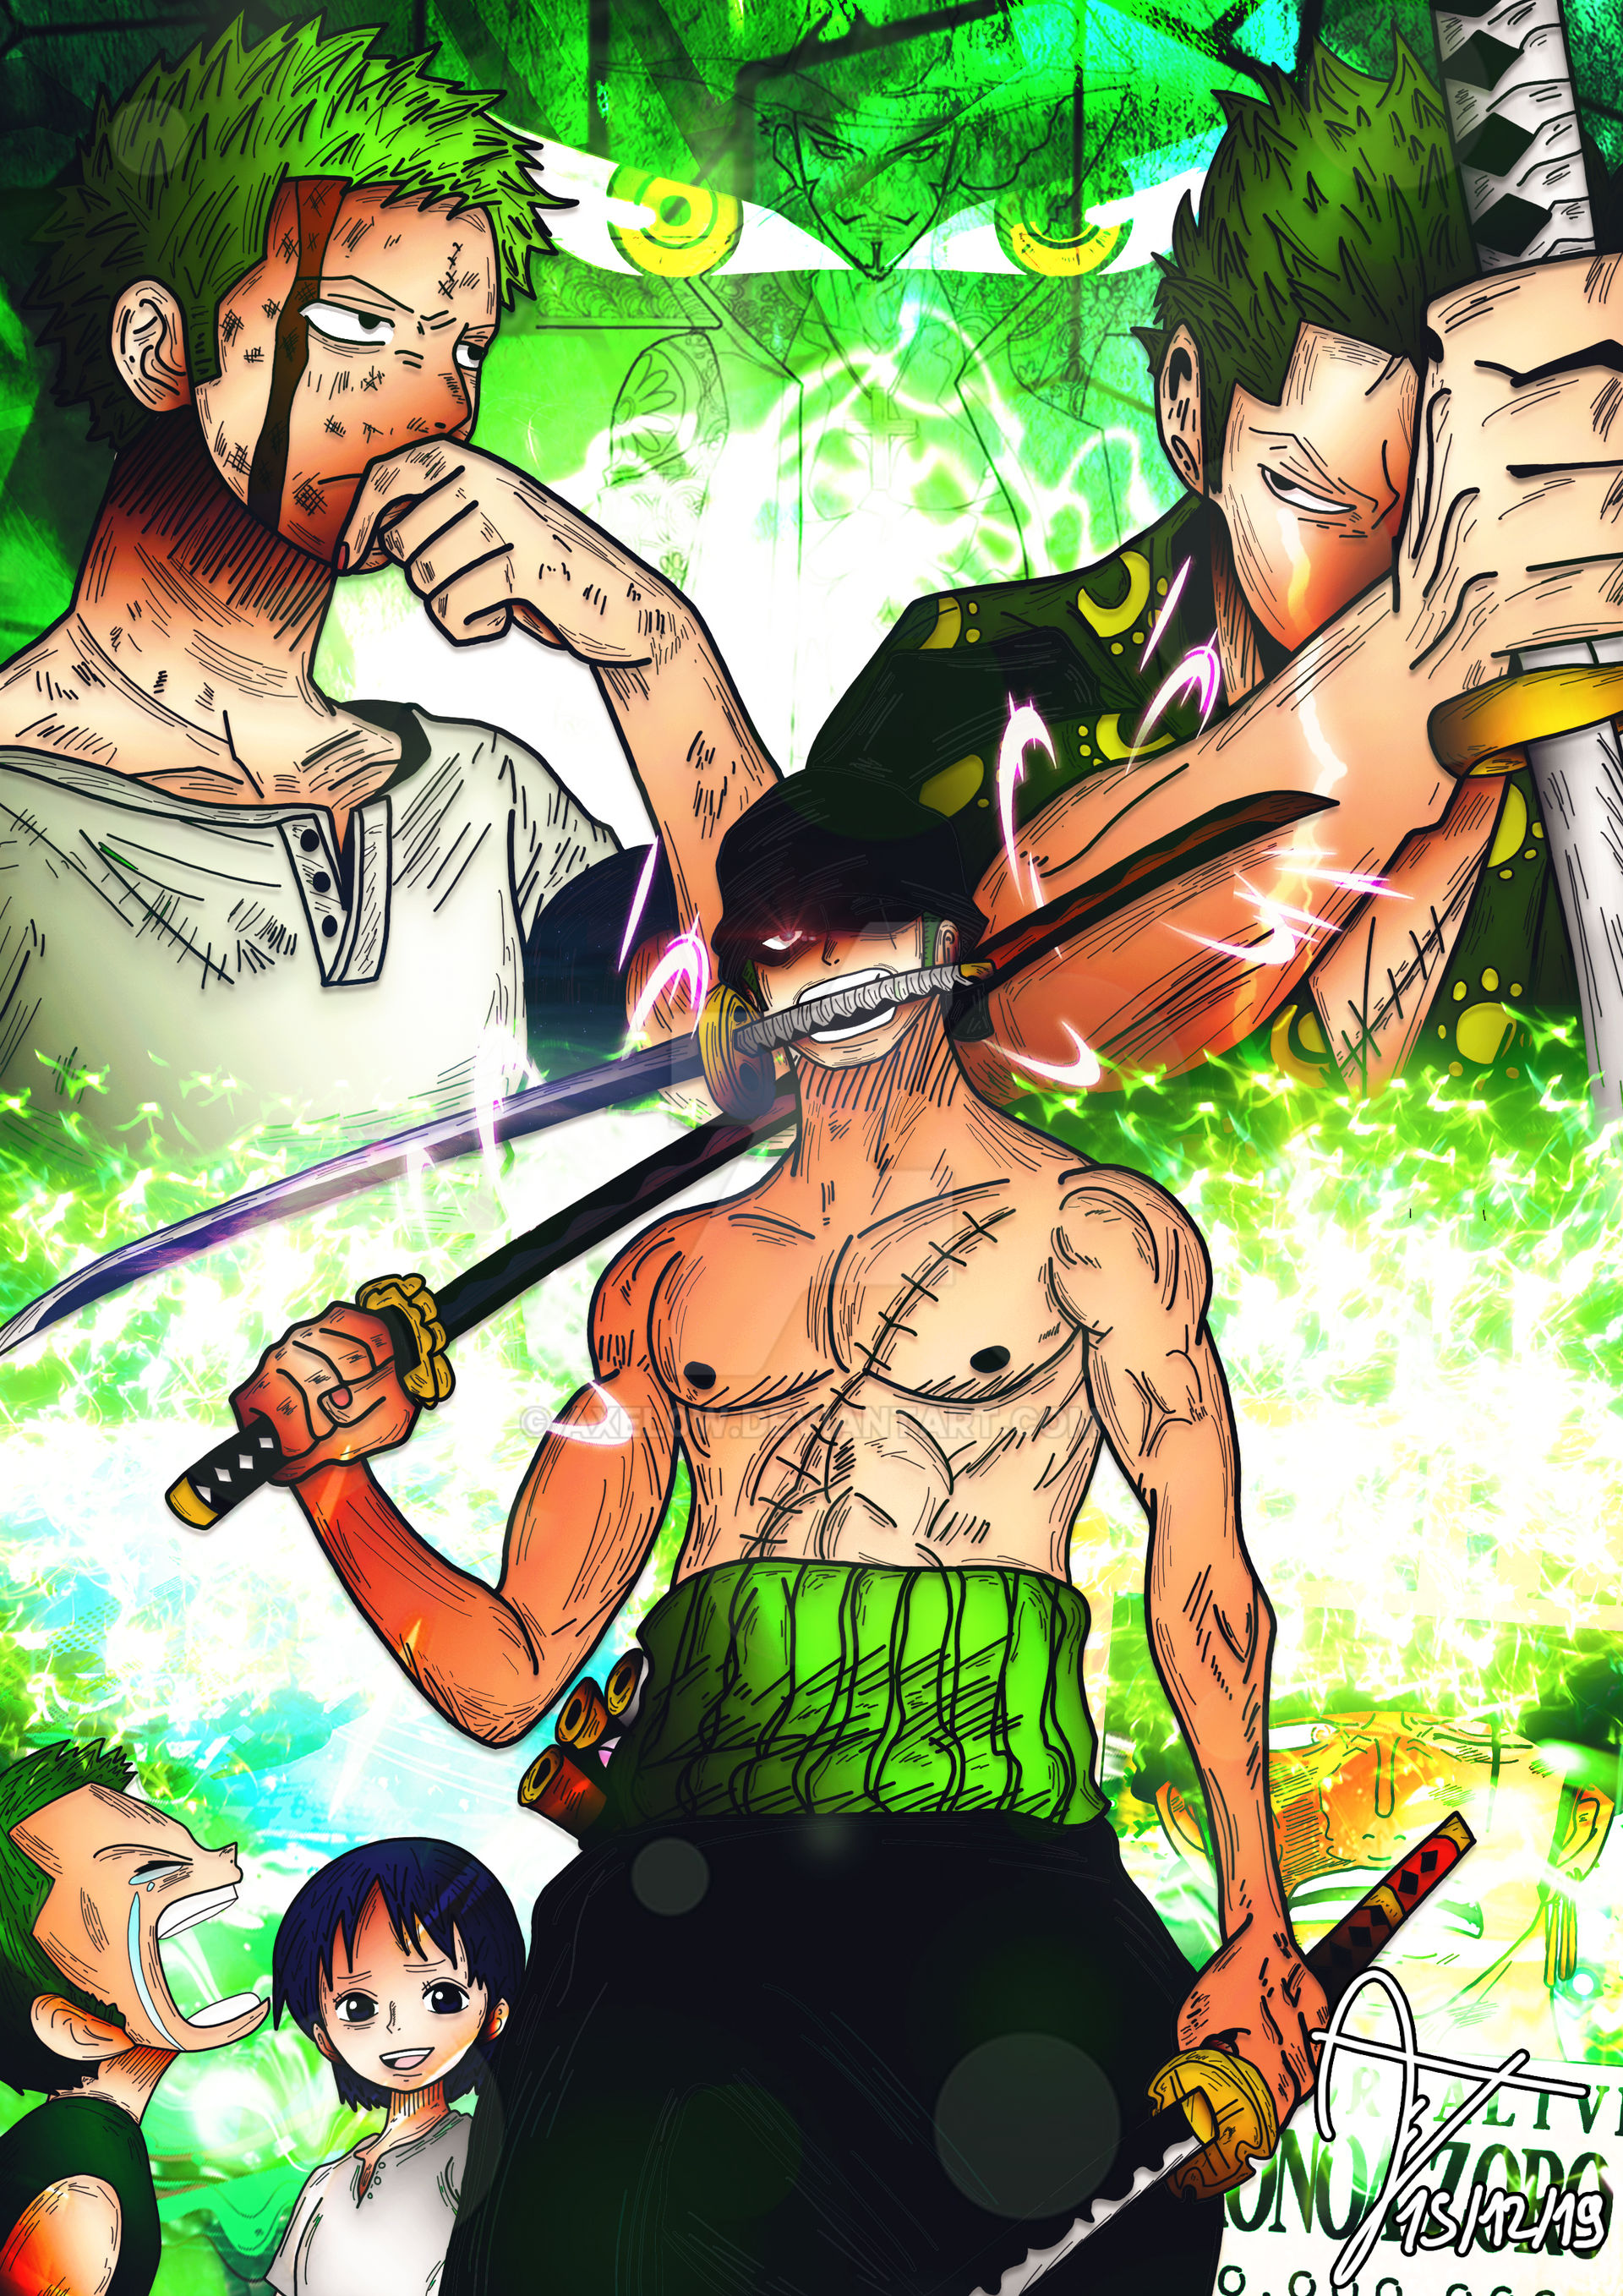 Luffy and Zoro Desktop Wallpaper (One Piece) by WHU-Dan on DeviantArt